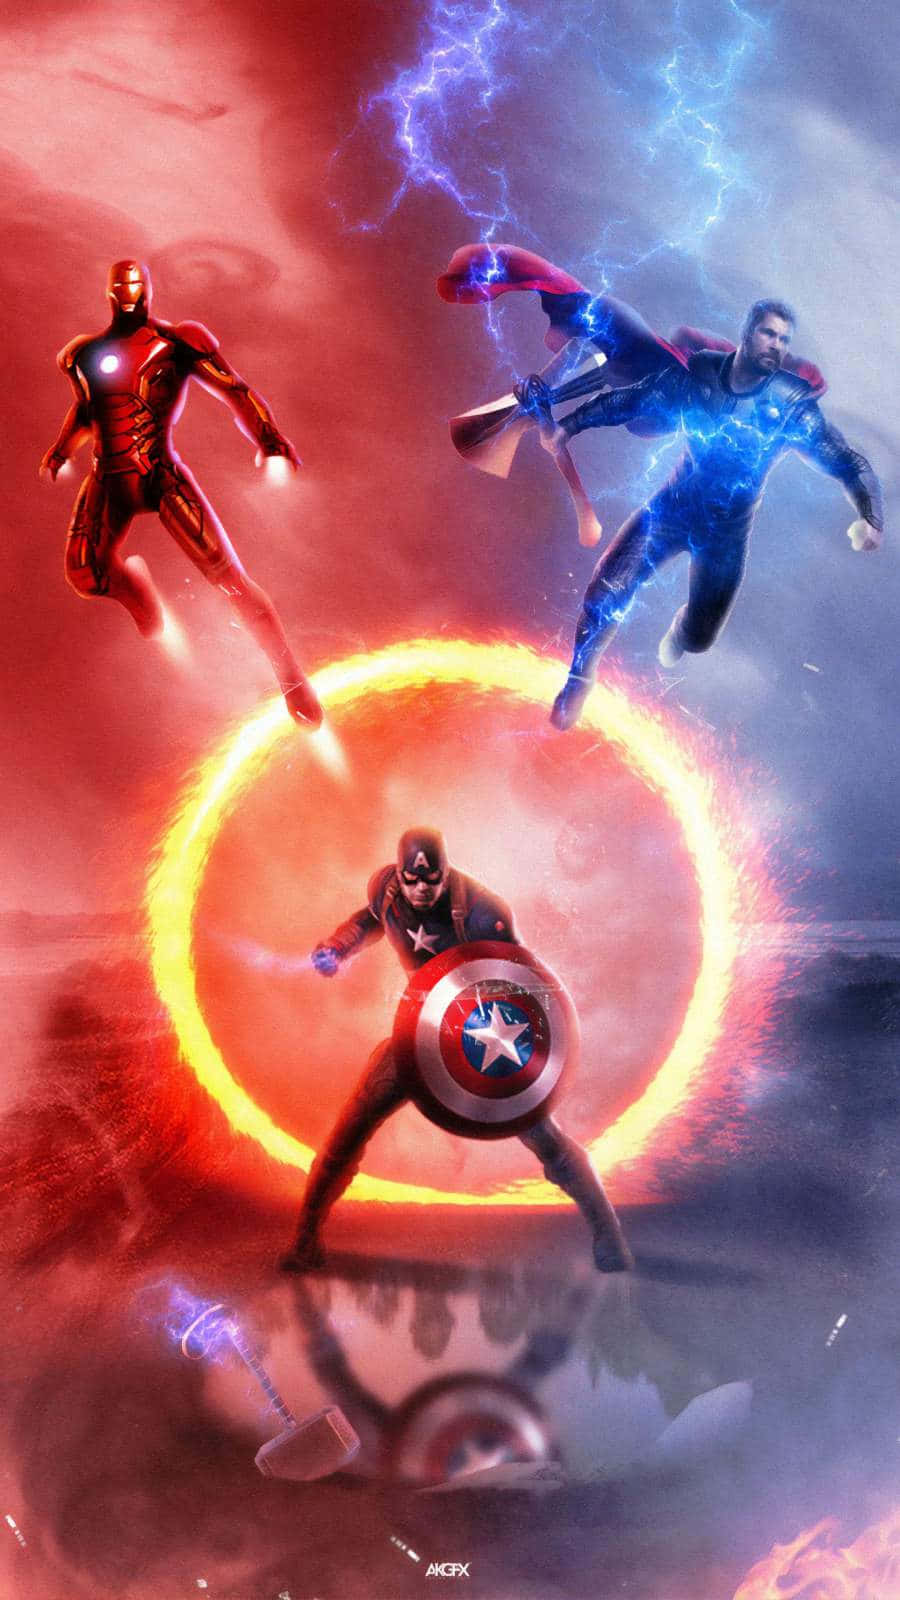 Download Avengers Endgame Iphone Wallpaper 